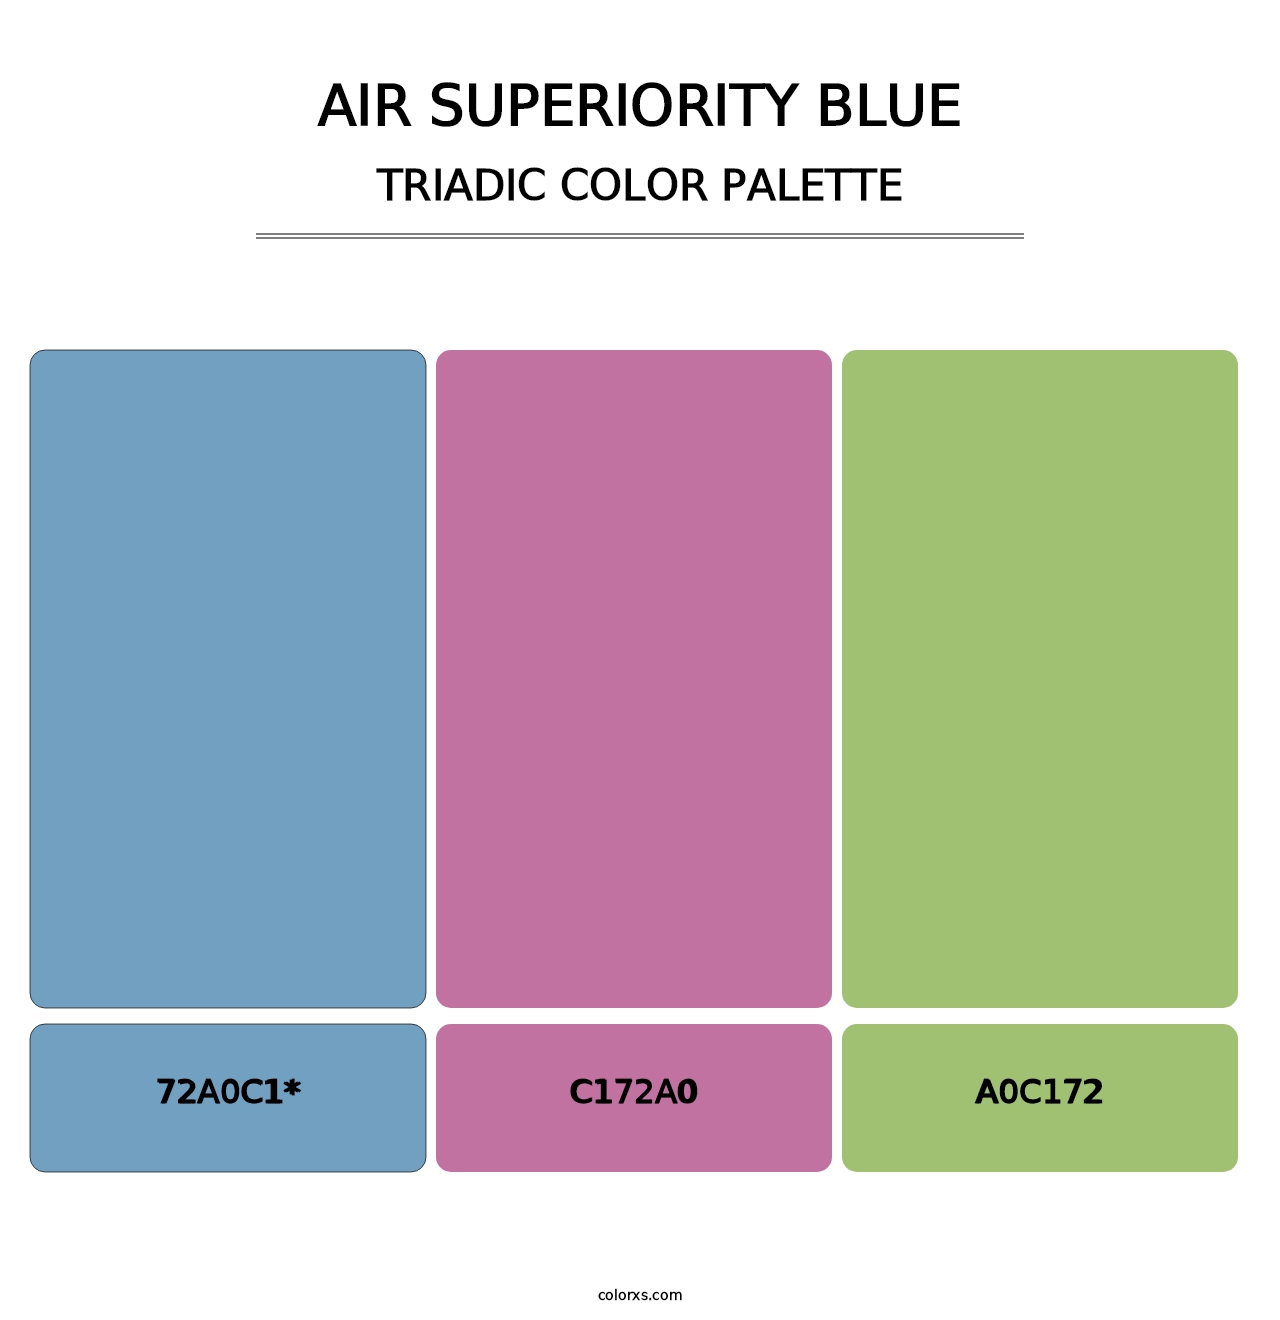 Air Superiority Blue - Triadic Color Palette